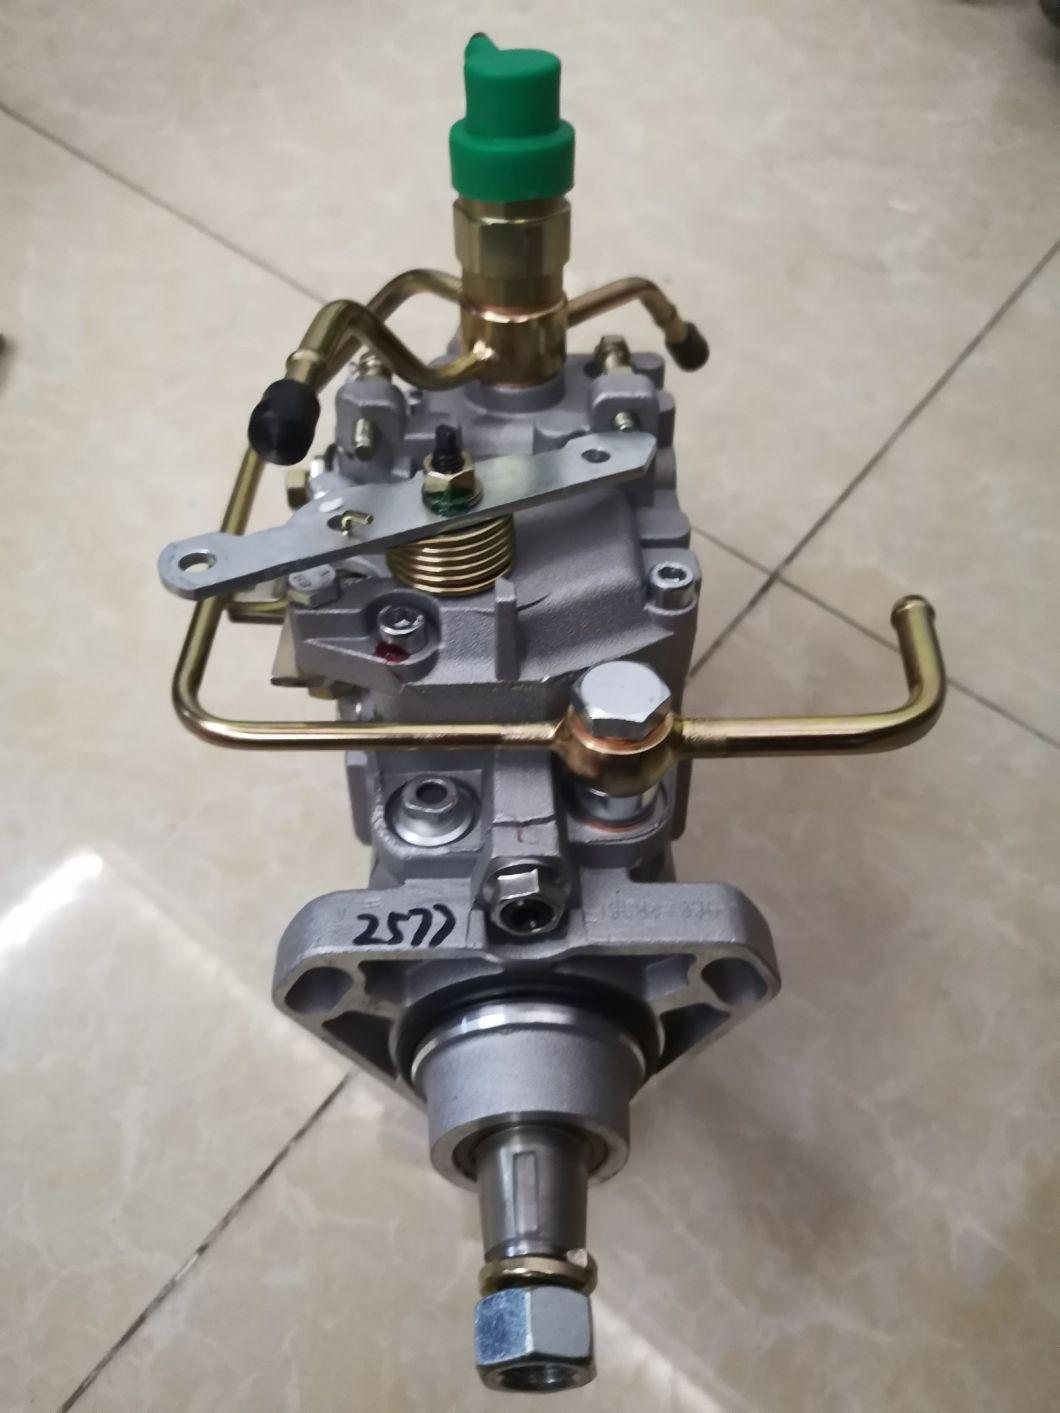 Fuel Injection Pump Fits for Yanmar Engine 4tne92 4tne94 4tne98 4tnv88 4tnv94 4tnv98 6hal2-T